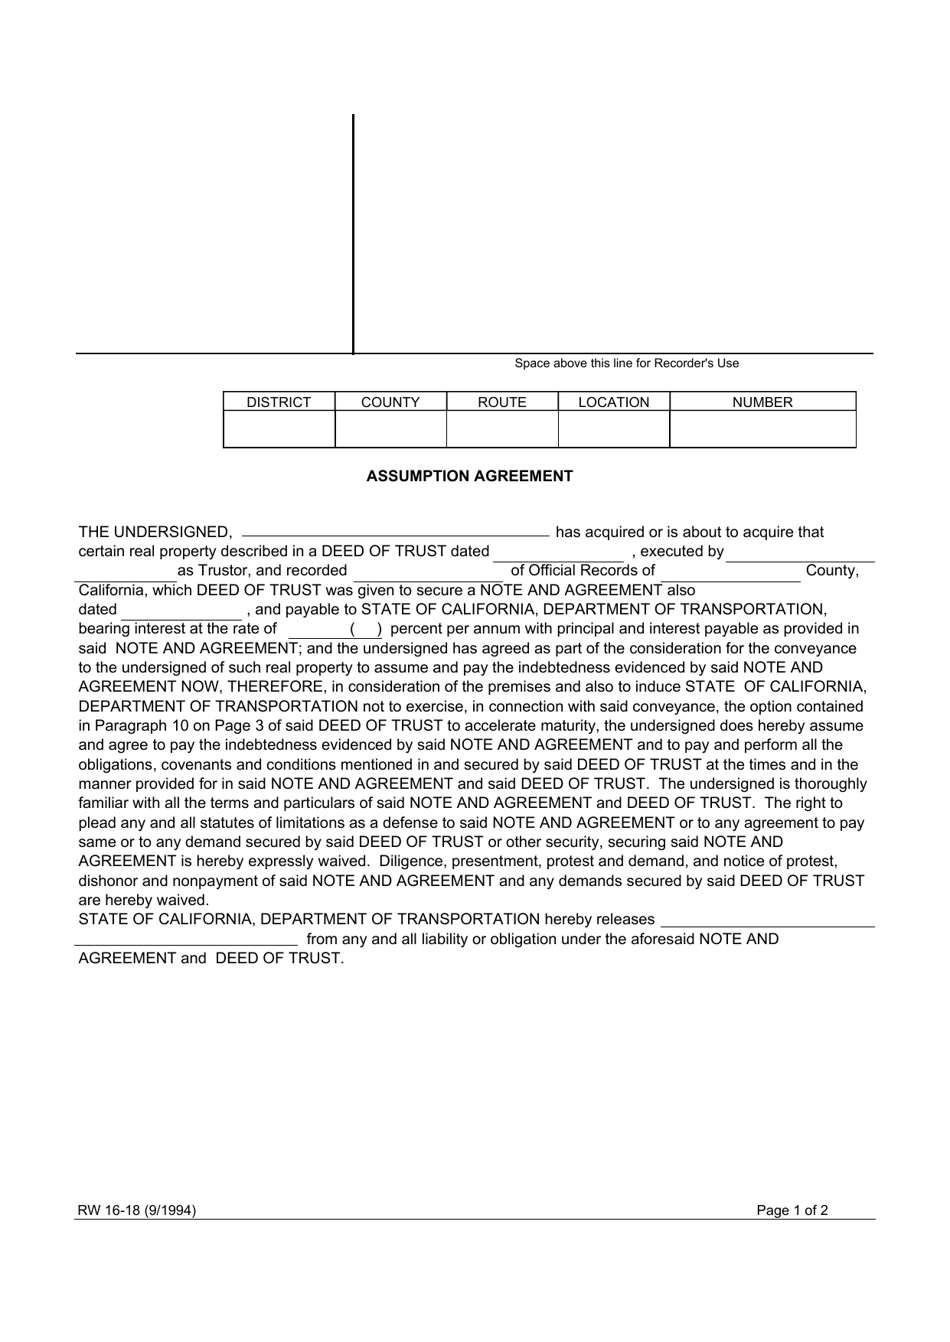 Form RW16-18 Assumption Agreement - California, Page 1